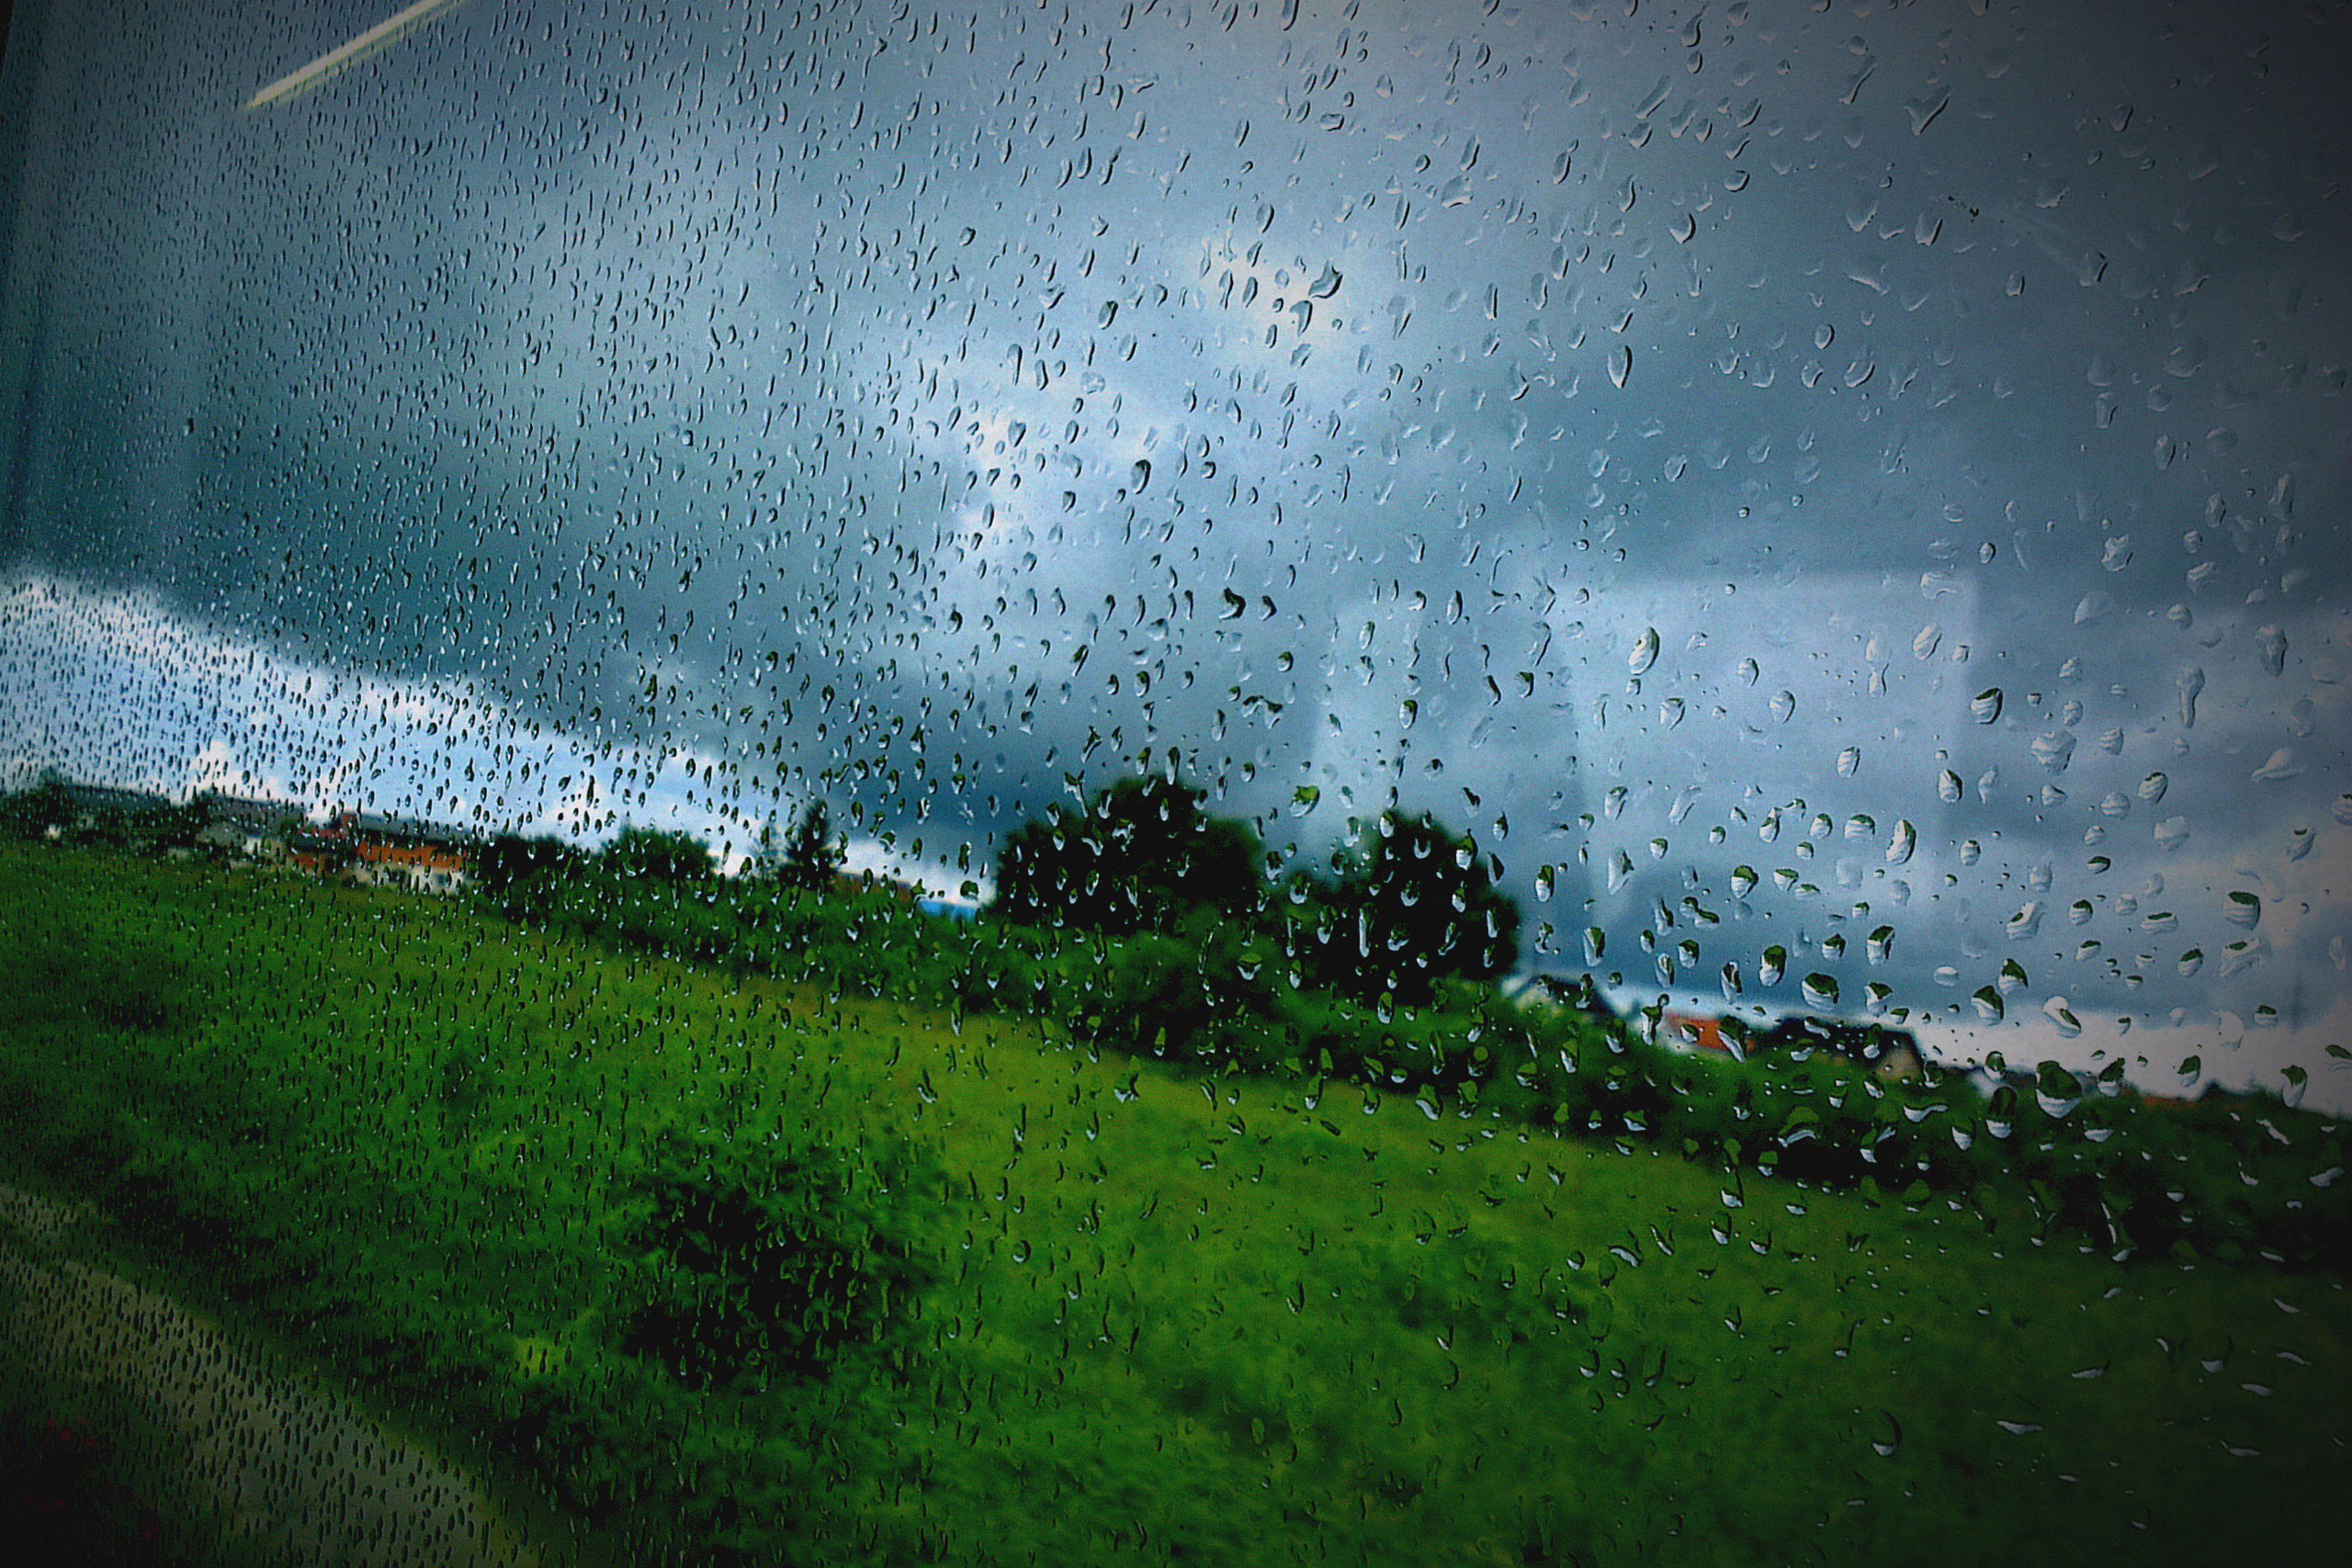 Тема дождливая погода. Дождь. Природа дождь. Дождь картинки. Ливень.